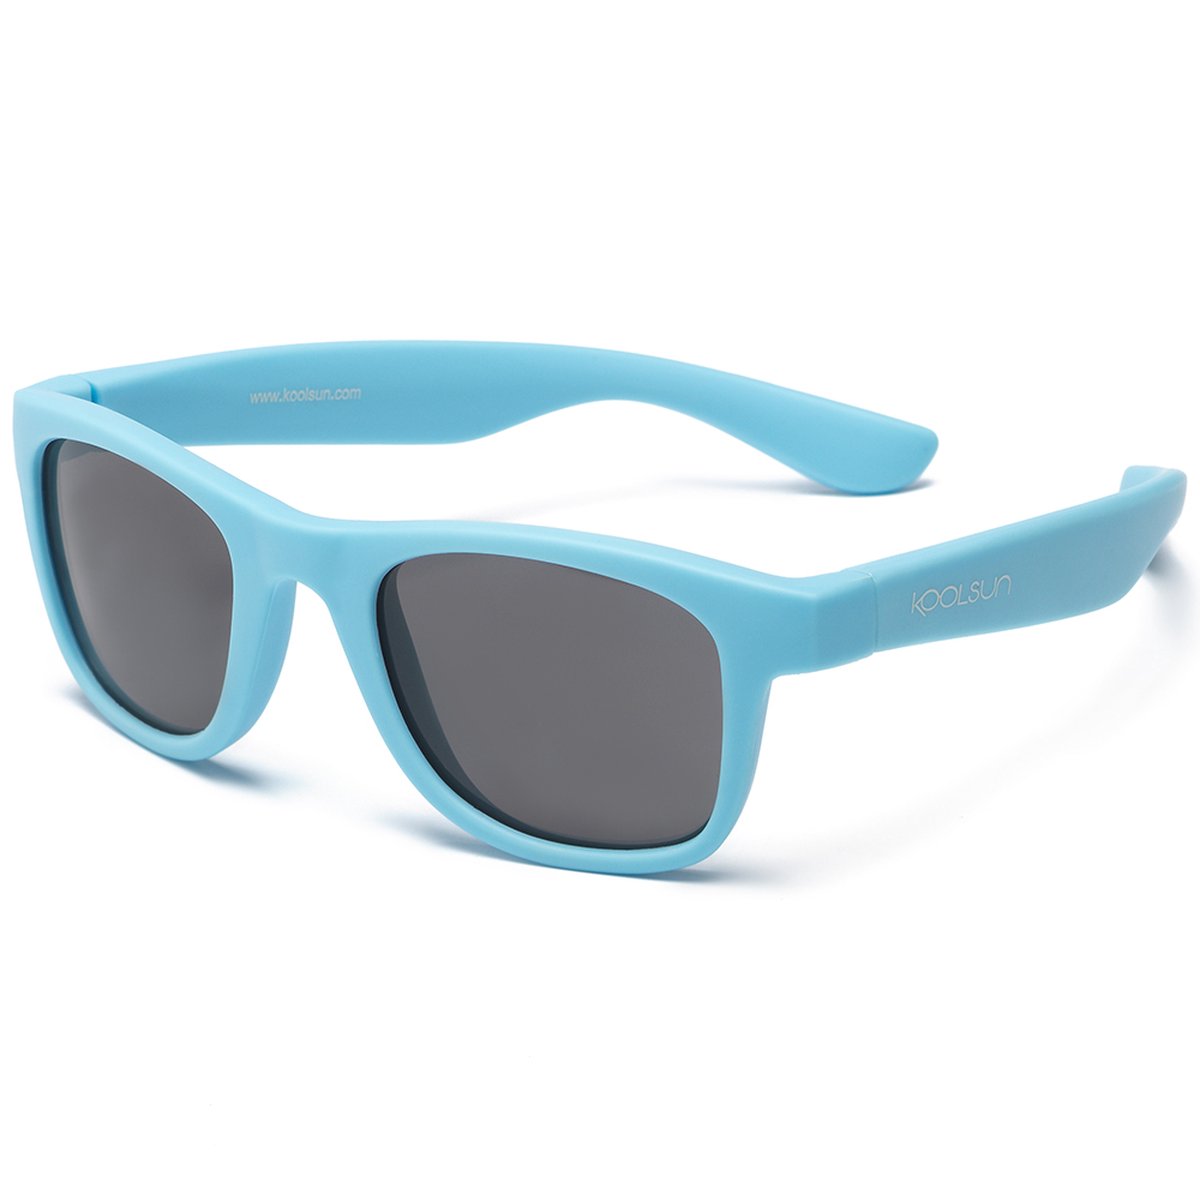 KOOLSUN® Wave - kinder zonnebril - Sky Blauw - 1-5 Jaar - UV400 - Categorie 3